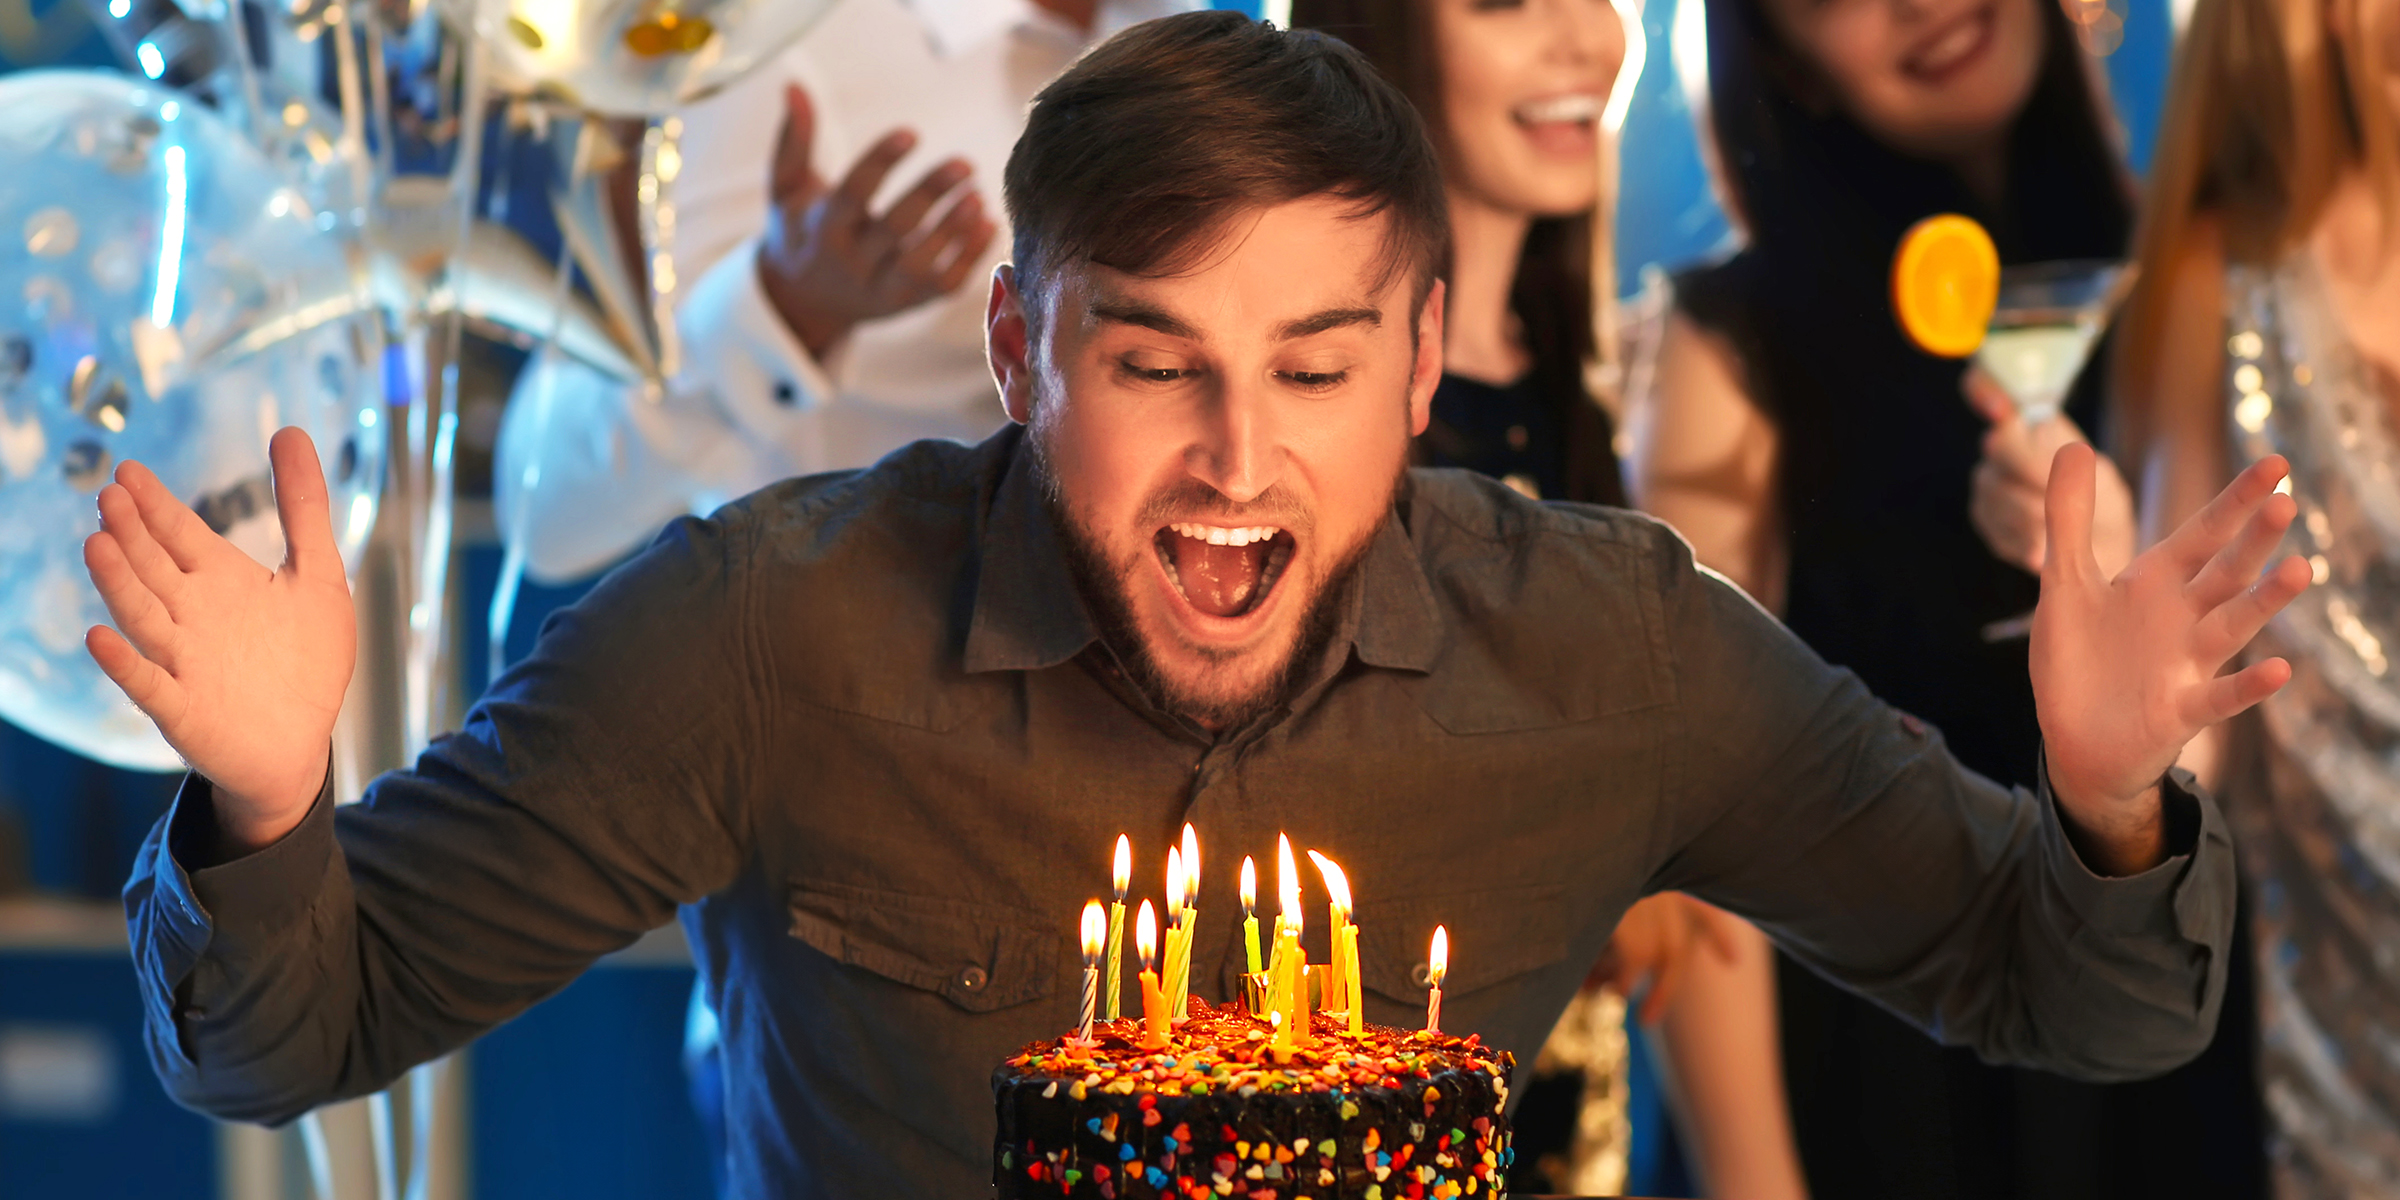 A happy man celebrating birthday | Source: Shutterstock